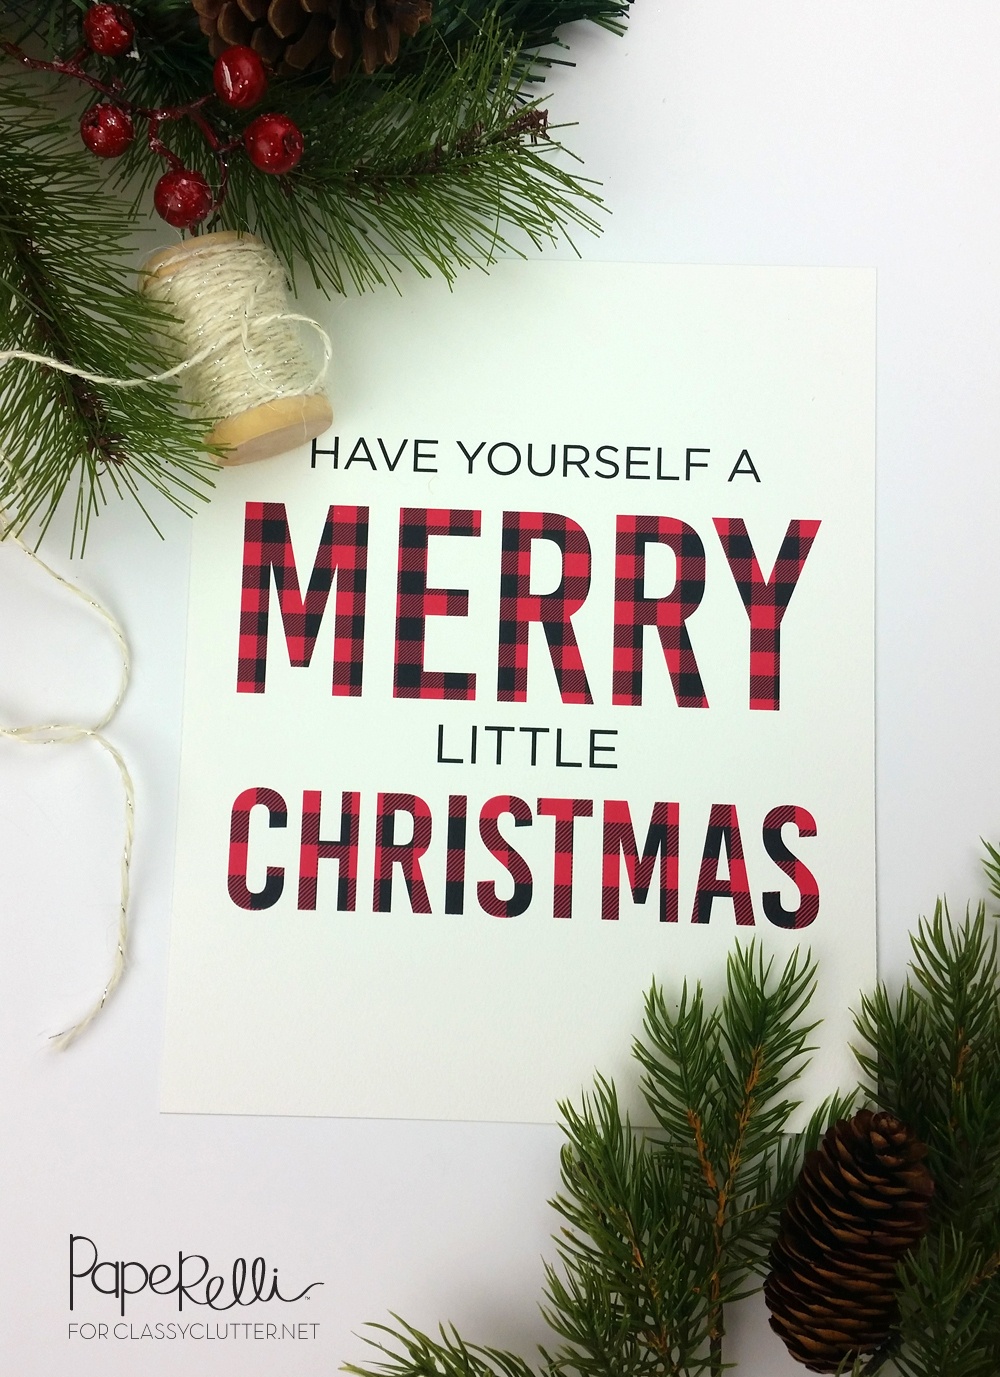 Buffalo Check Plaid Christmas Print - Classy Clutter - Free Printable Christmas Decorations